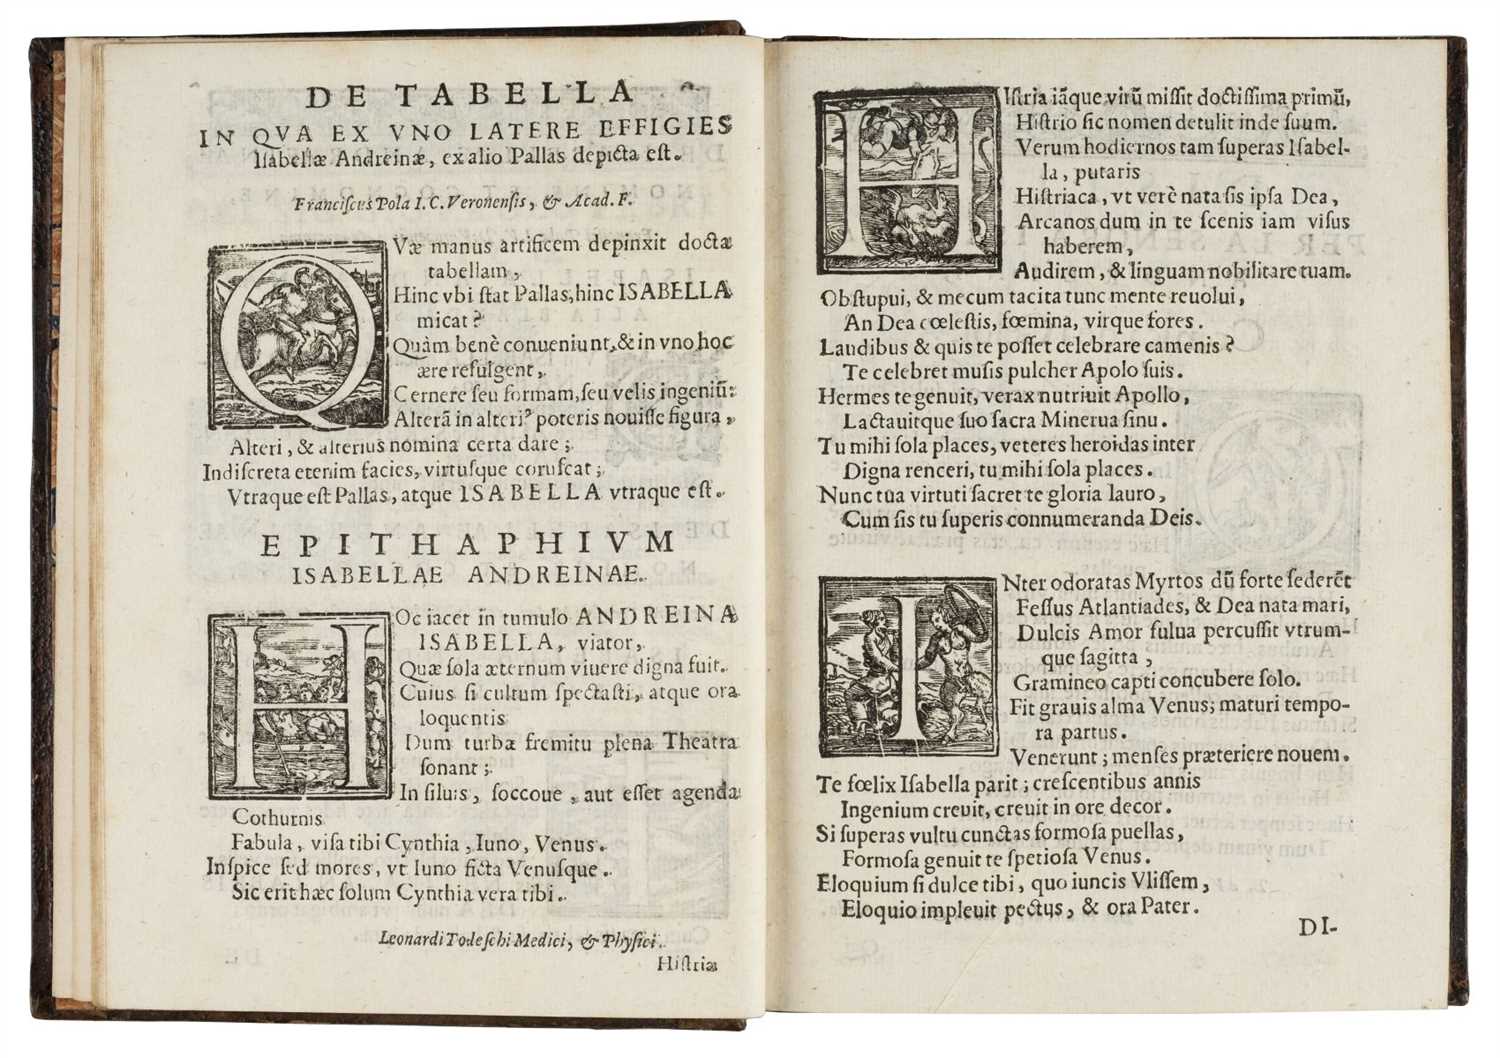 Lot 139 - Andreini (Isabella), Lettere, 1612